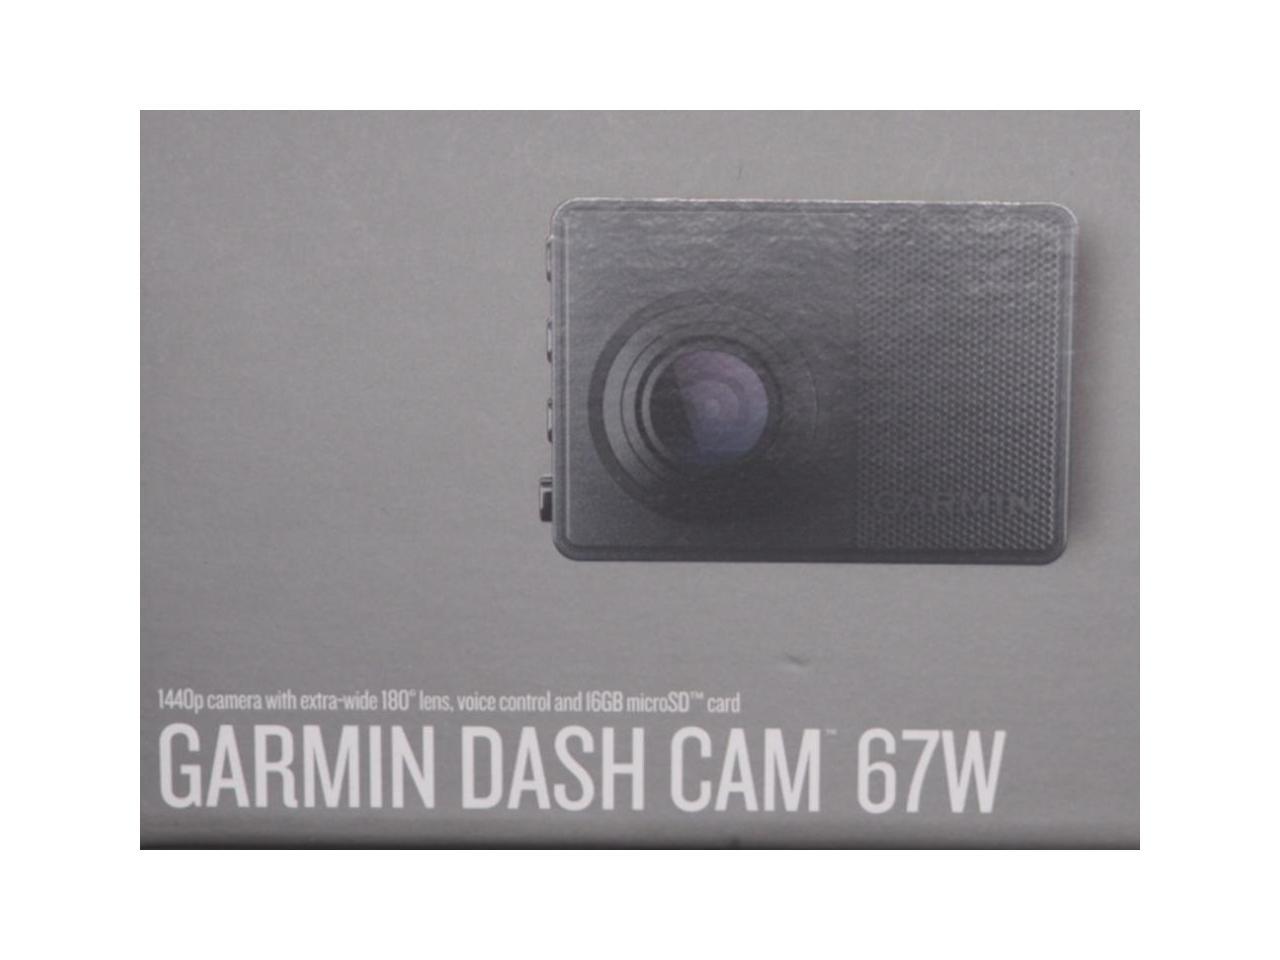 Garmin 67W 1440p Dash Cam, Black #010-02505-05 - image 20 of 21